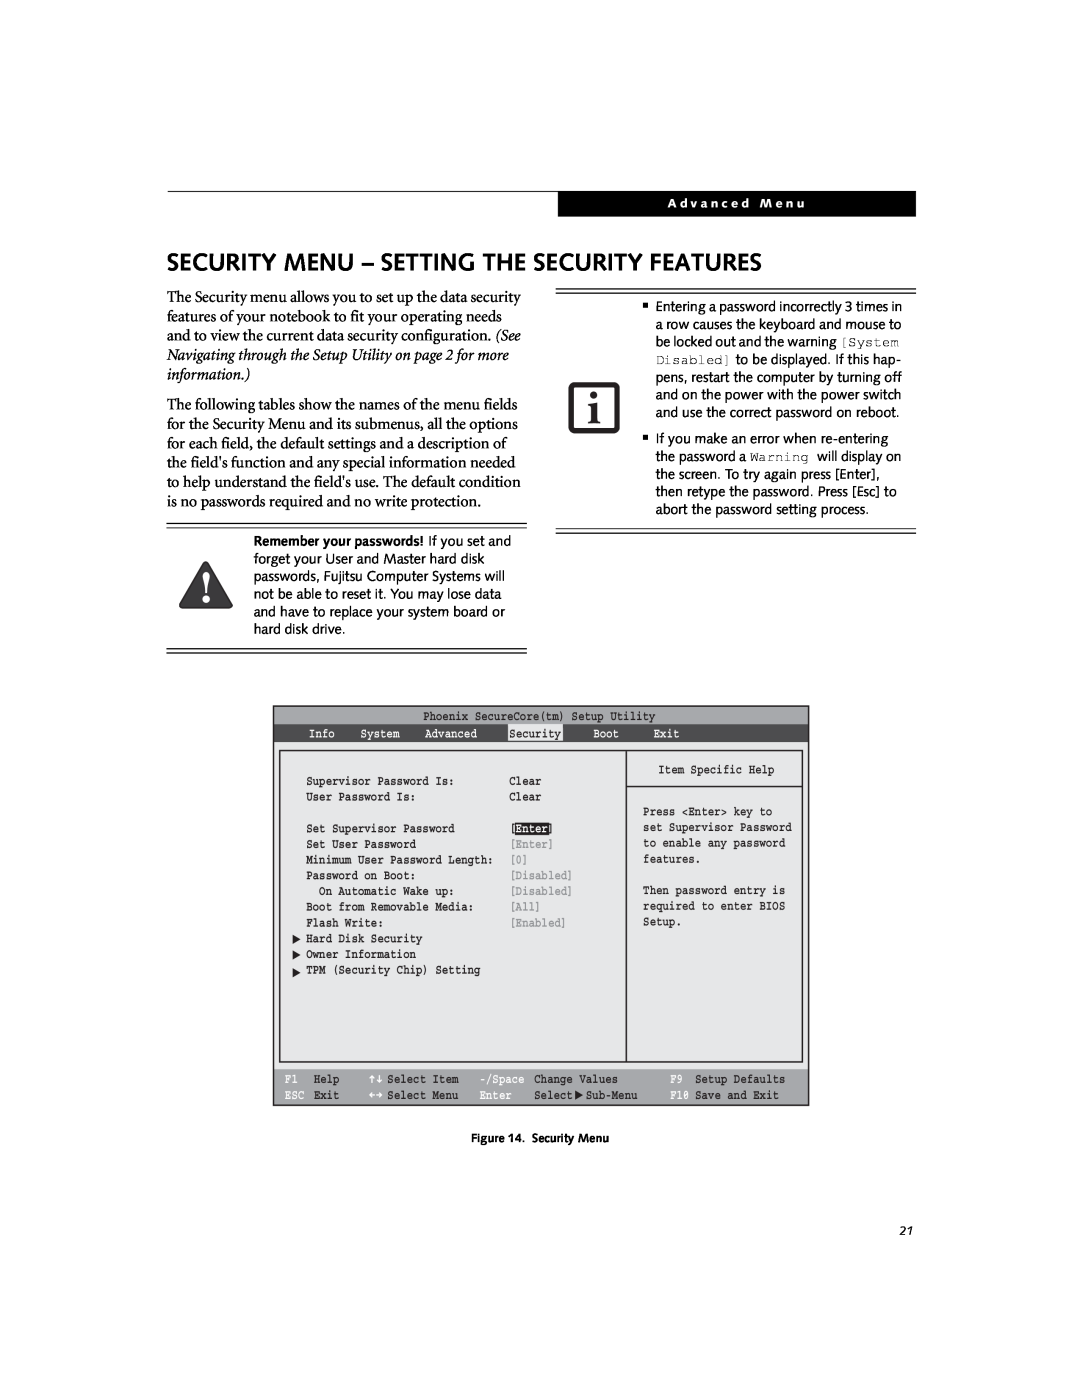 Fujitsu S6520 manual Security Menu - Setting The Security Features 